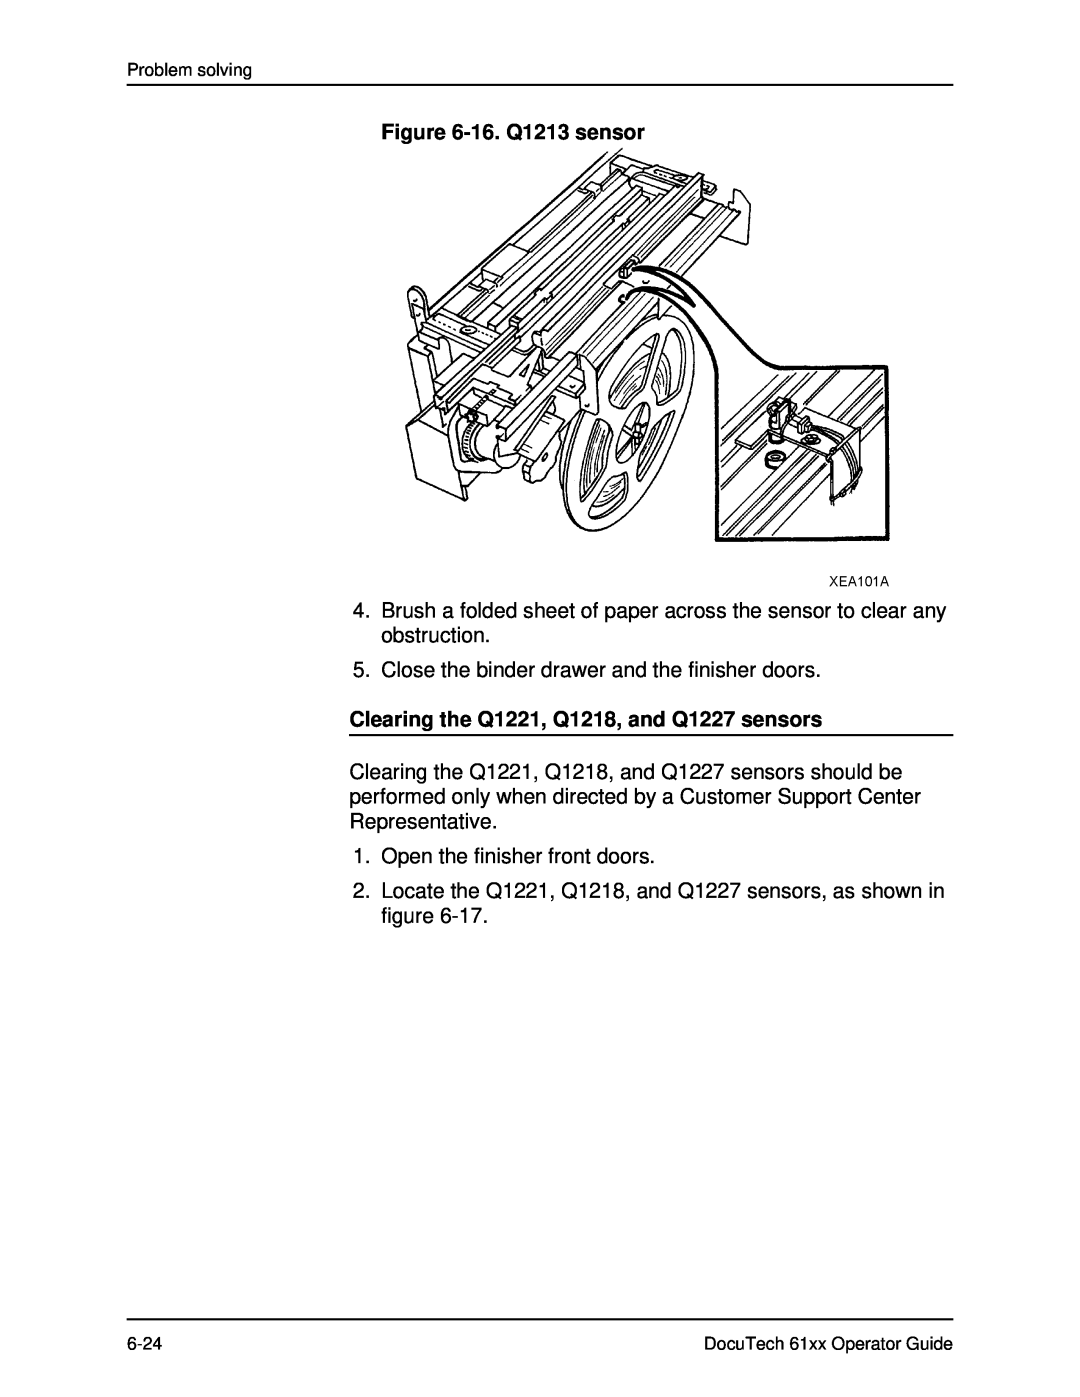 Xerox 61xx manual 16. Q1213 sensor, Clearing the Q1221, Q1218, and Q1227 sensors 